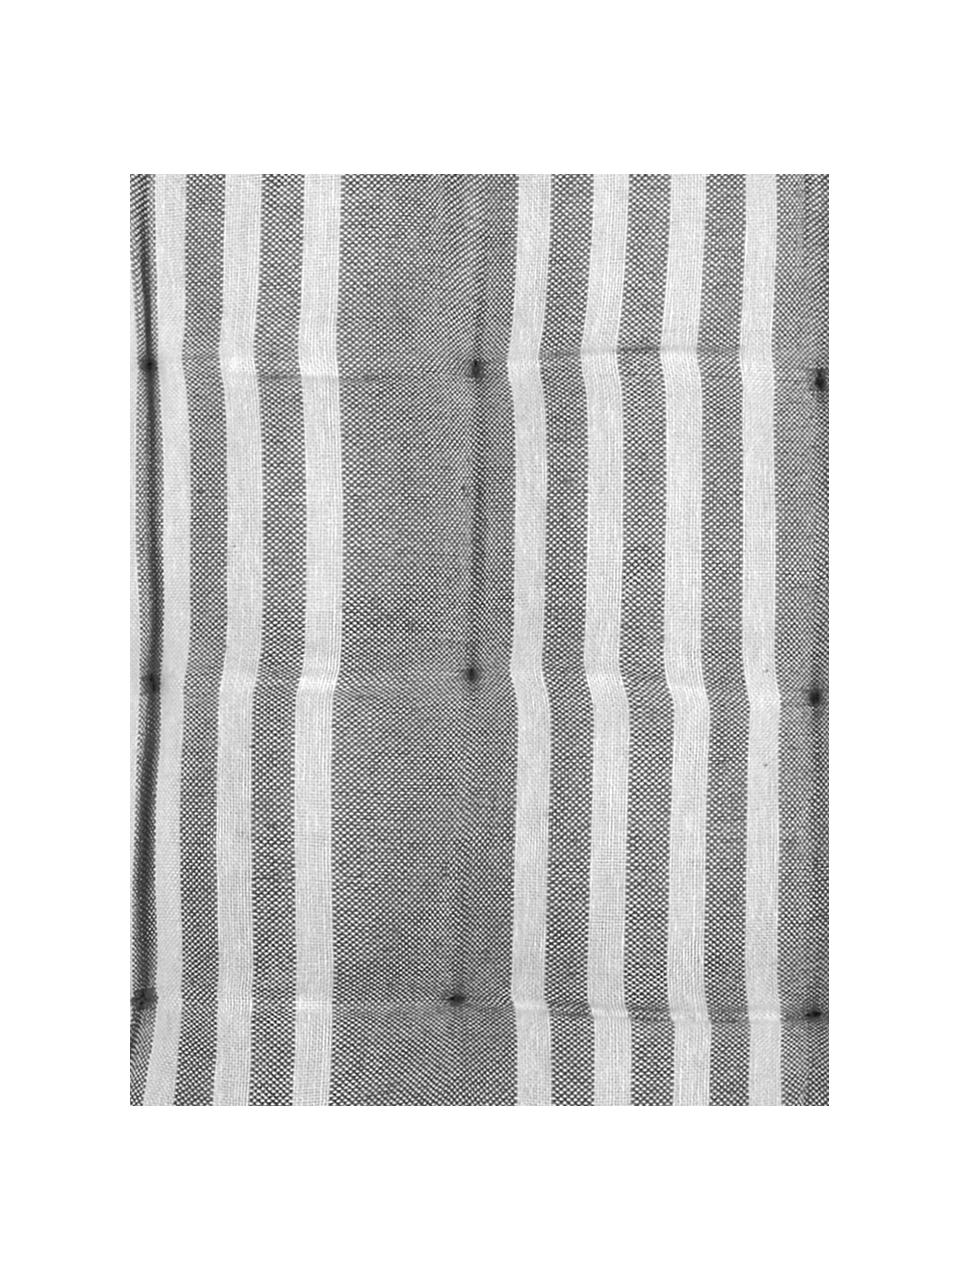 Cuscino sedia grigio Mandelieu, Cotone misto, Grigio scuro, bianco, Larg. 40 x Lung. 40 cm